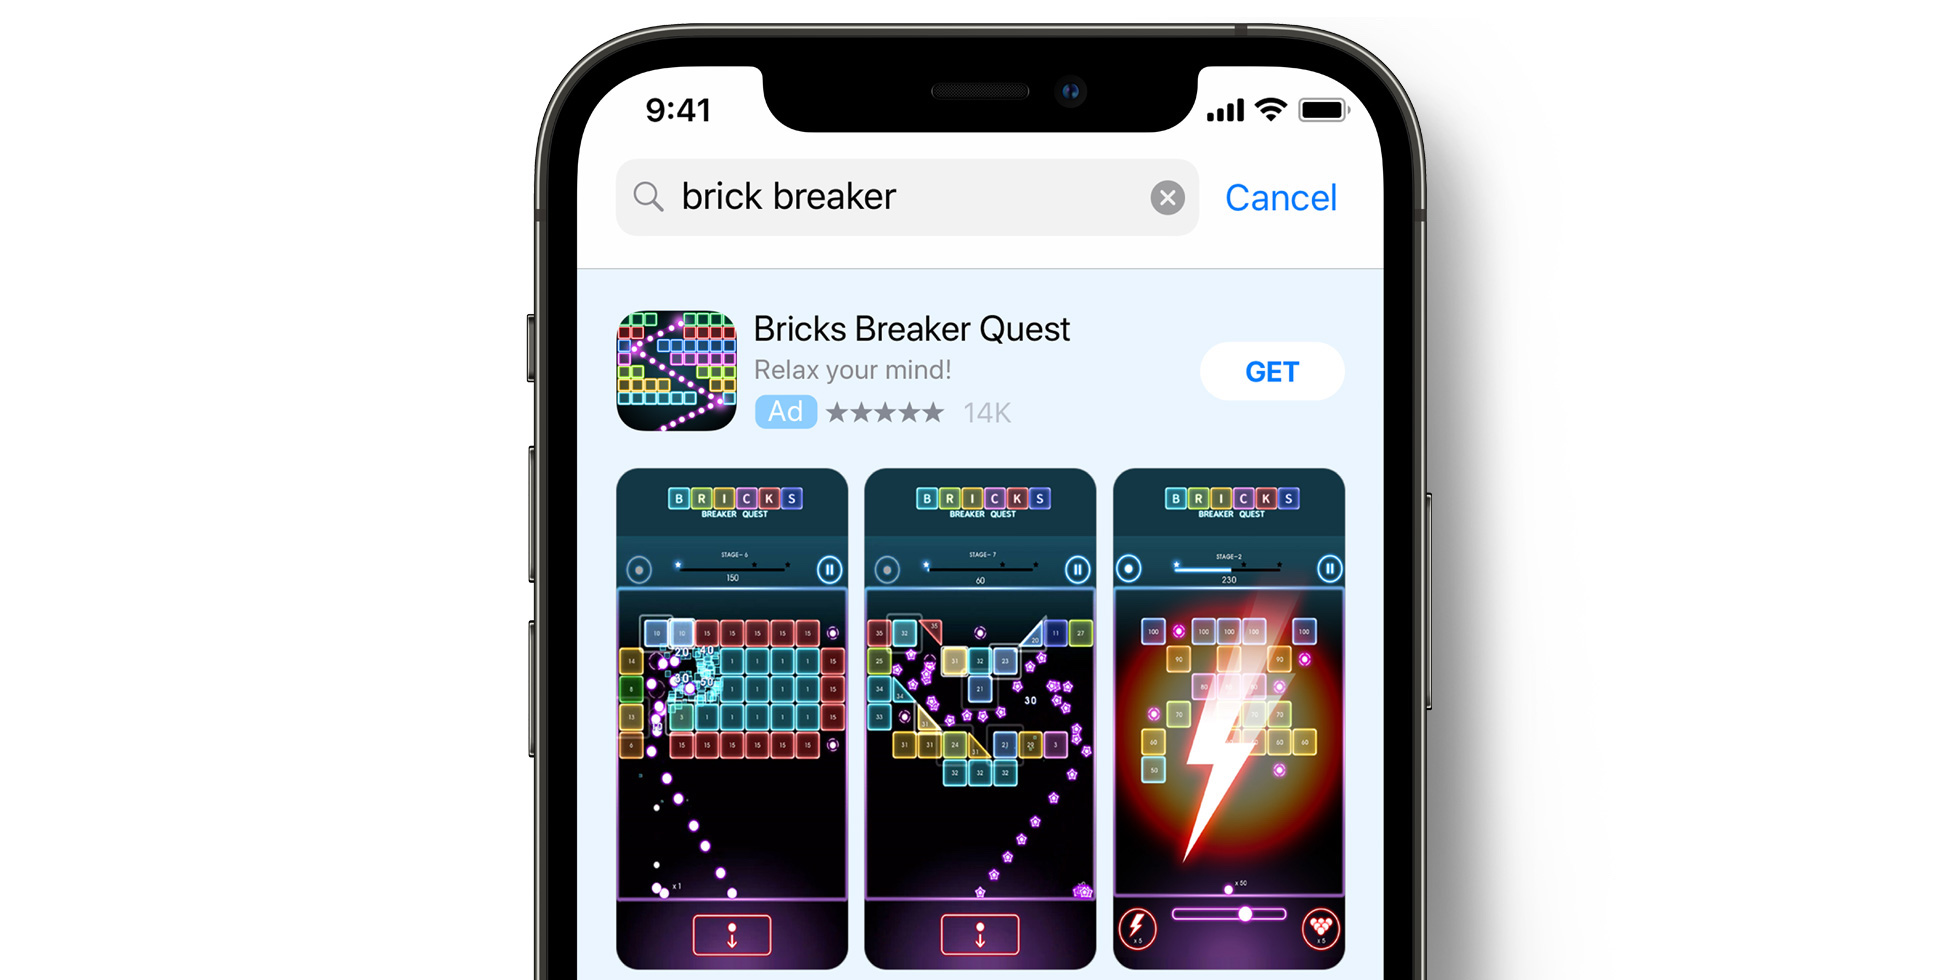 Bricks Breaker Quest ad on the App Store 